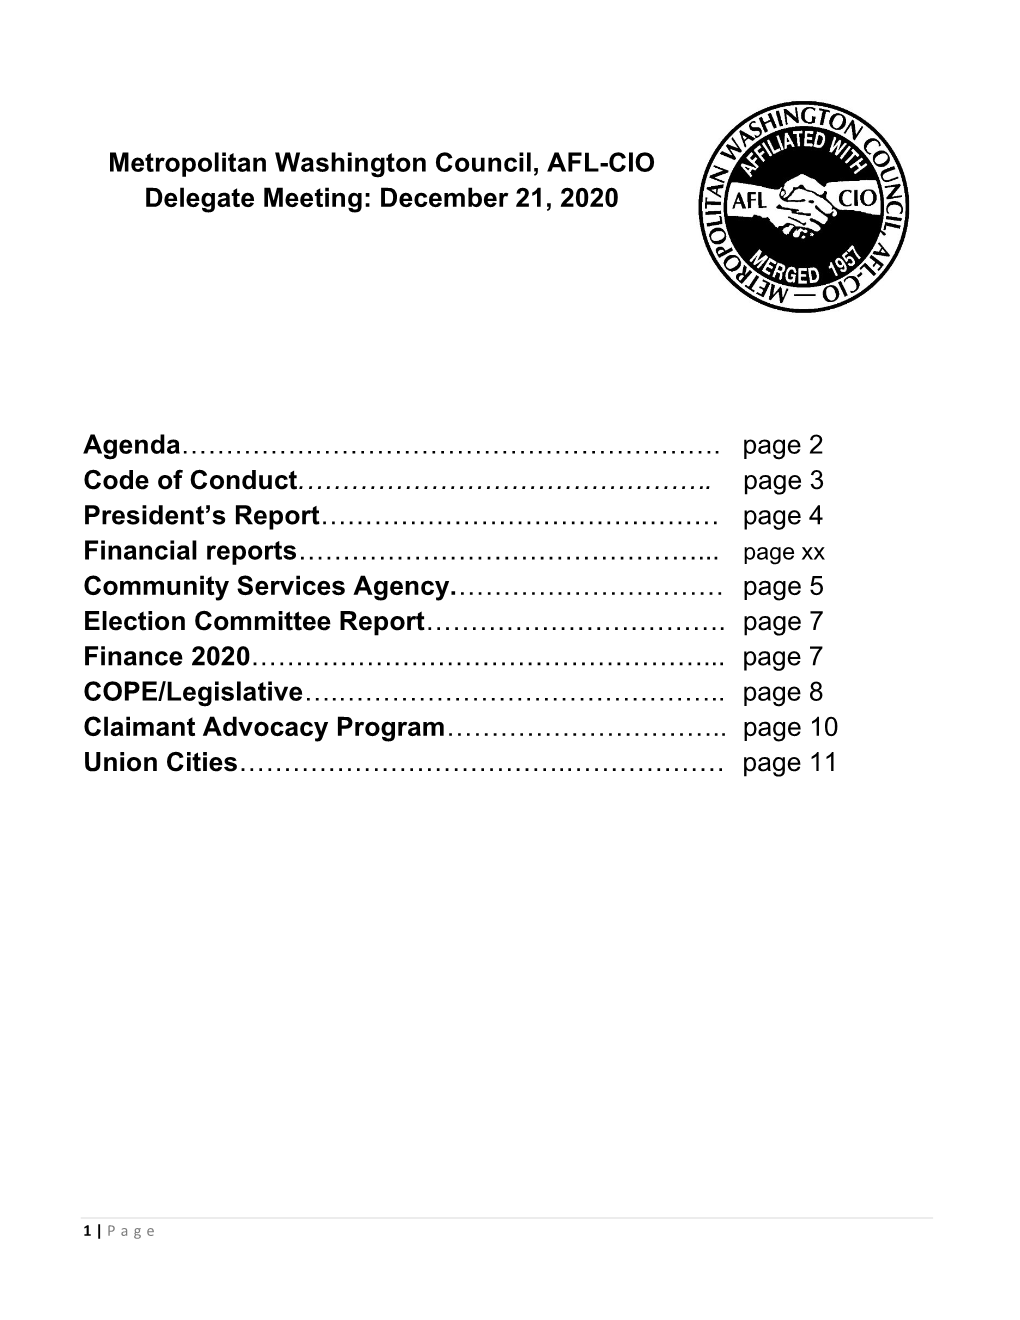 Delegate Packet: Agenda, Reports